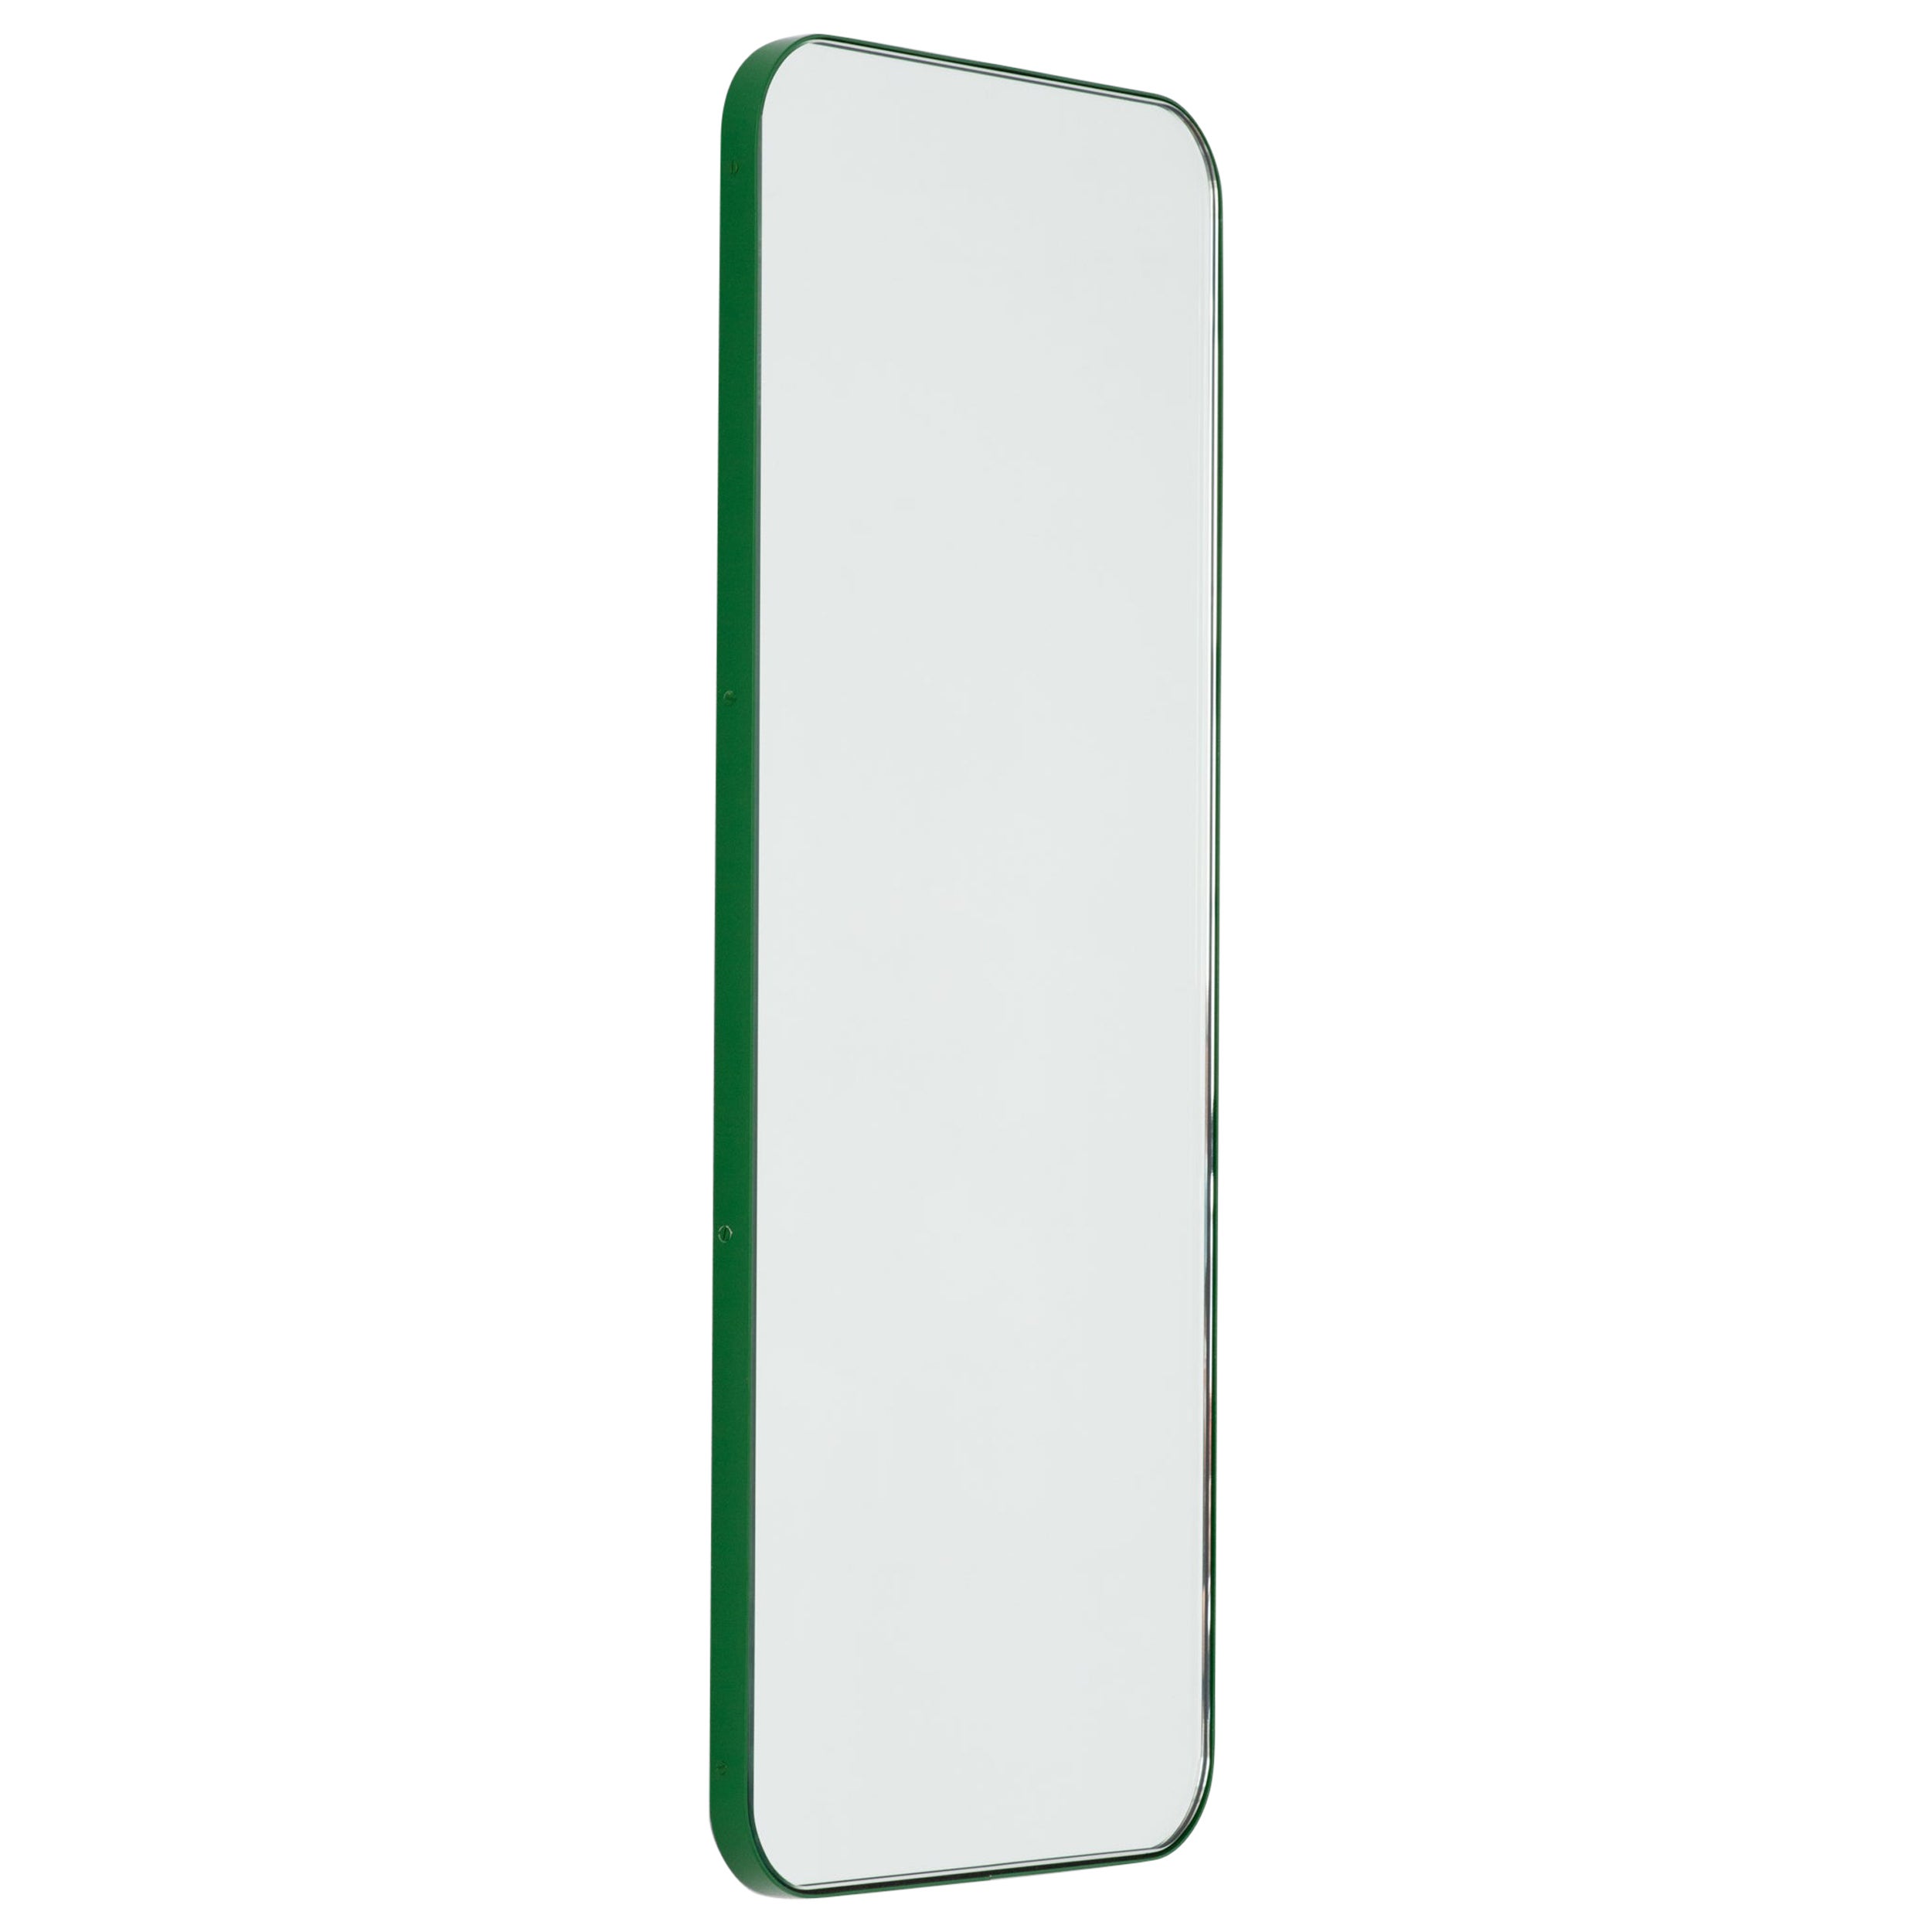 Miroir rectangulaire minimaliste Quadris avec cadre vert moderne, moyen